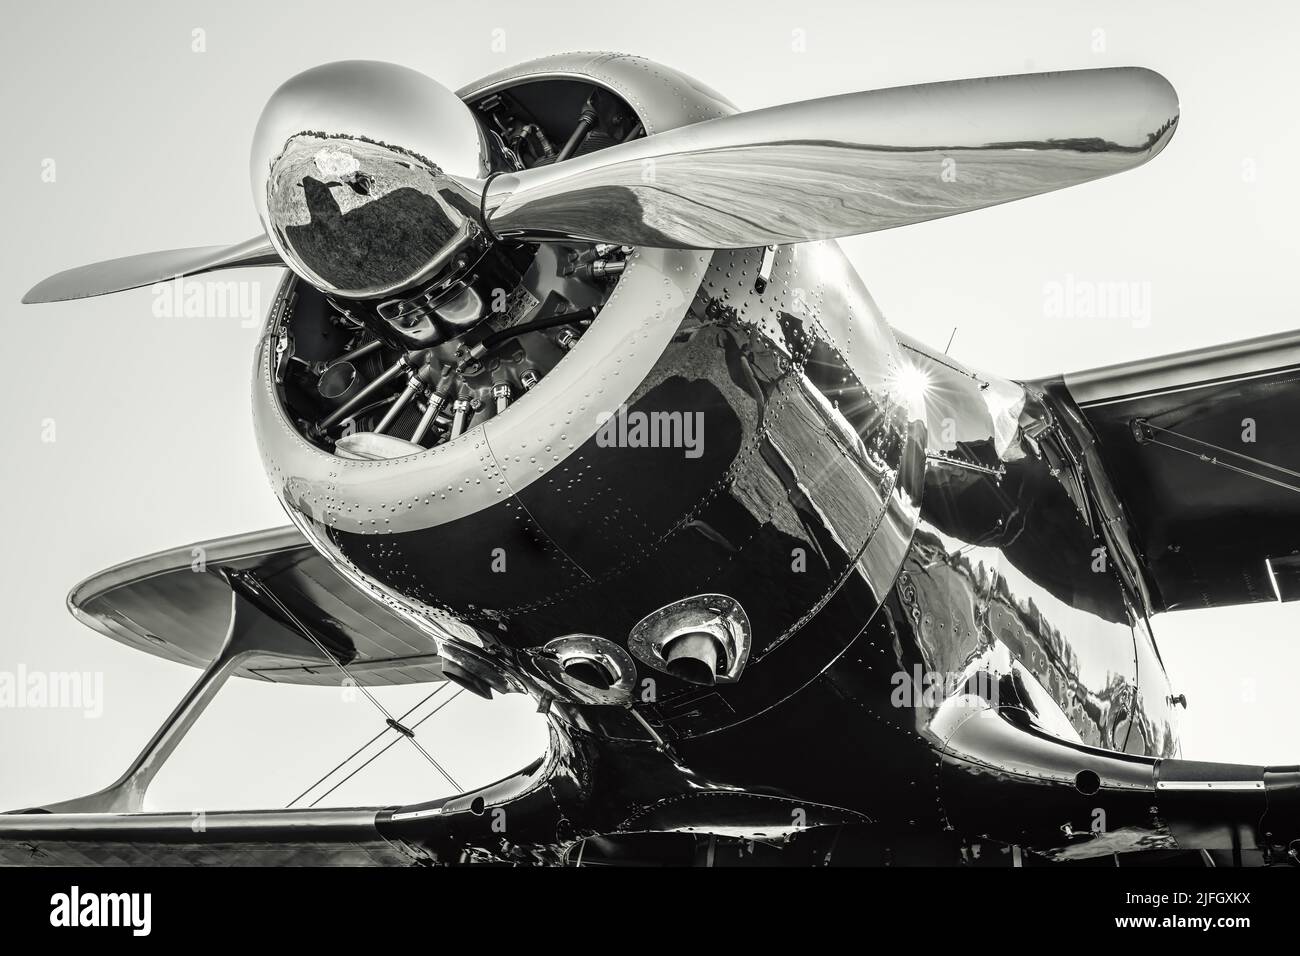 propeller of an historical aircraft Stock Photo